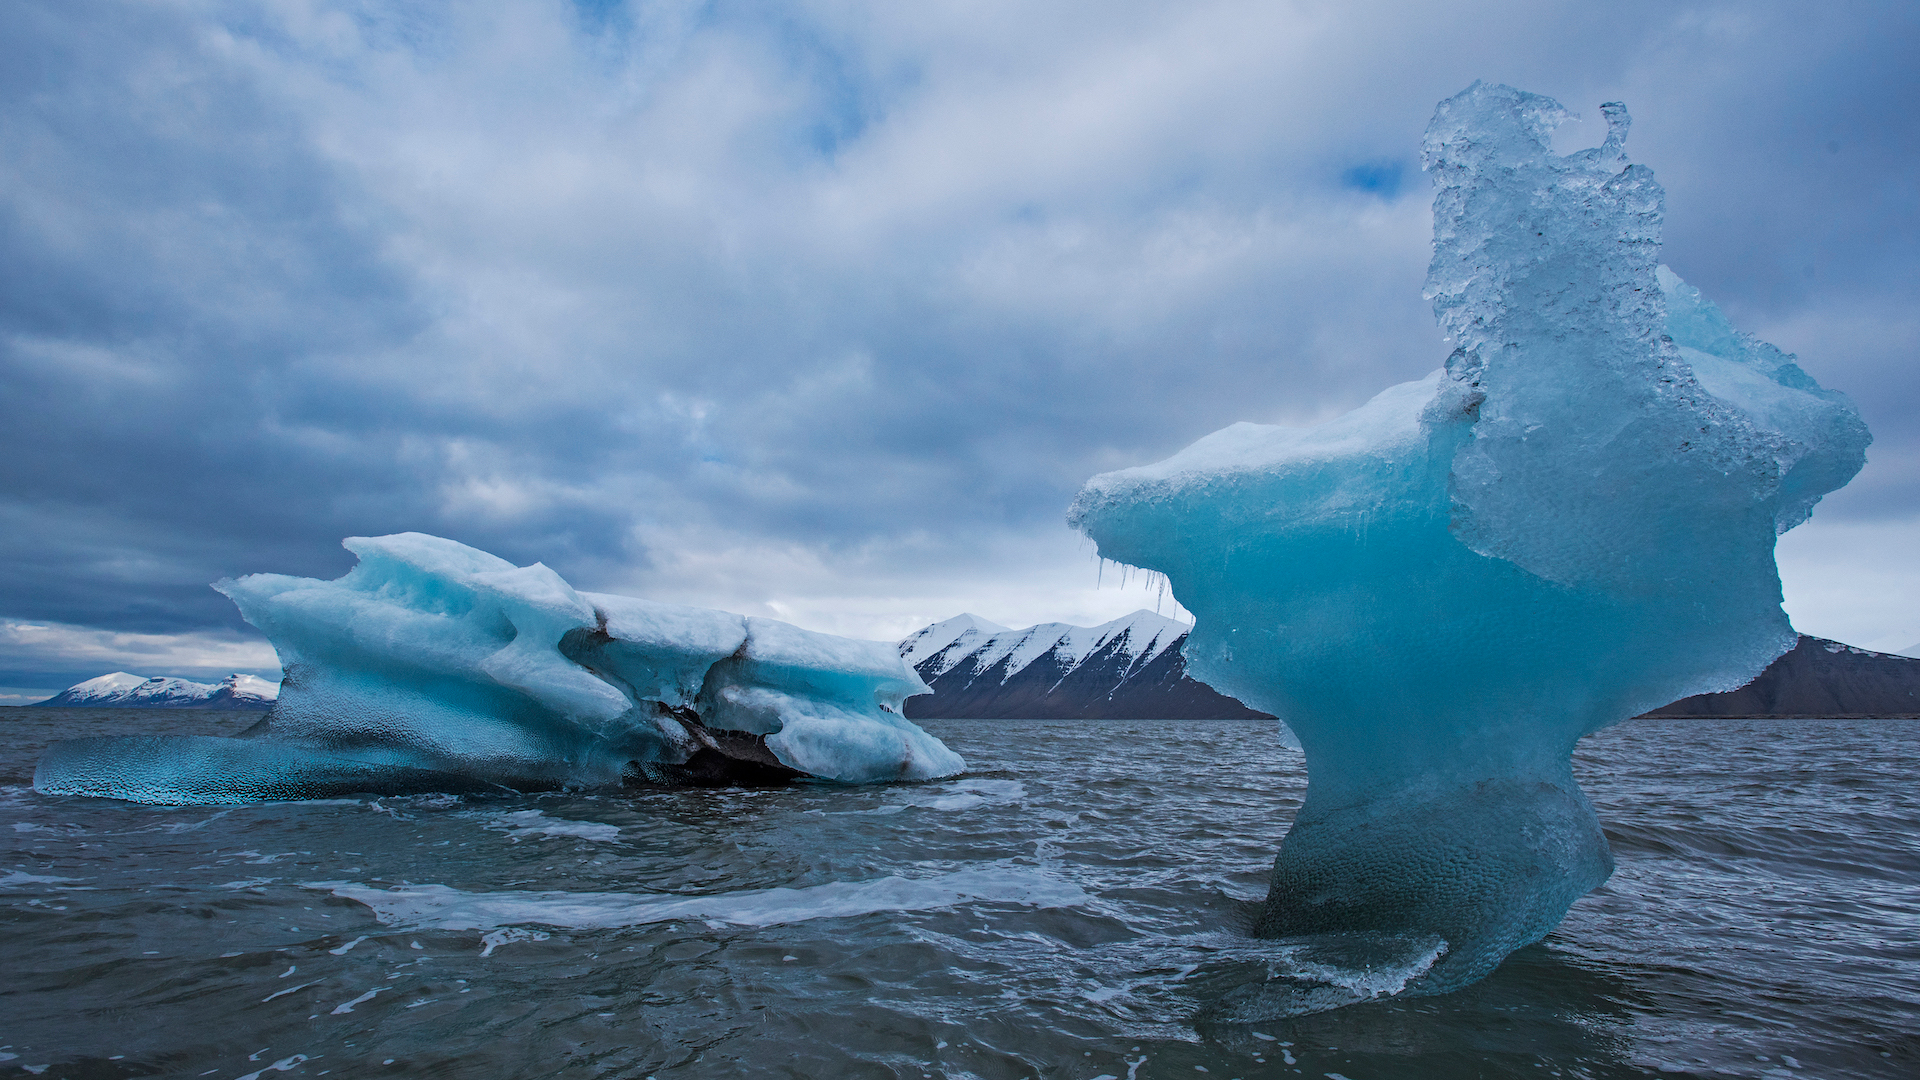 Icebergs Floating in the Arctic Ocean off the Coast of Svalbard by Dhritiman Mukherjee